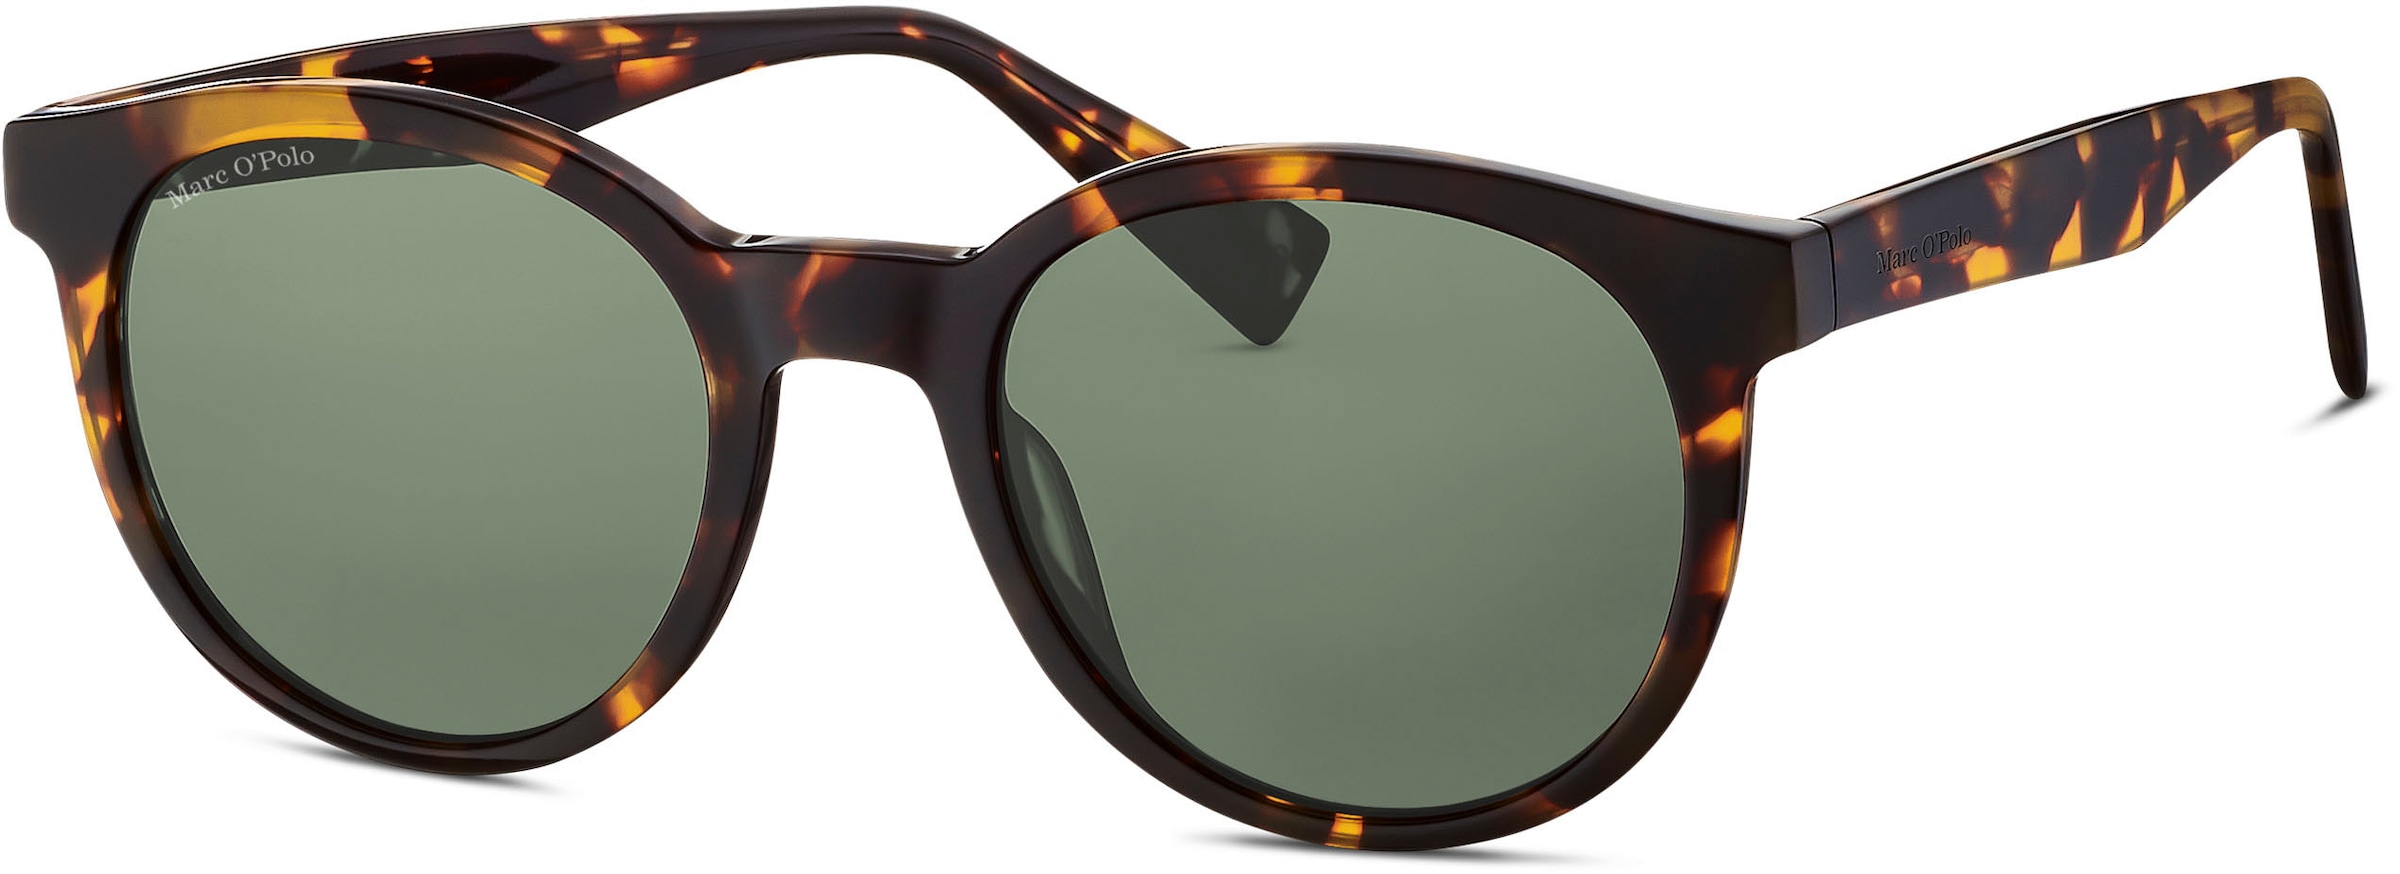 Sonnenbrille »Modell 506185«, Panto-Form